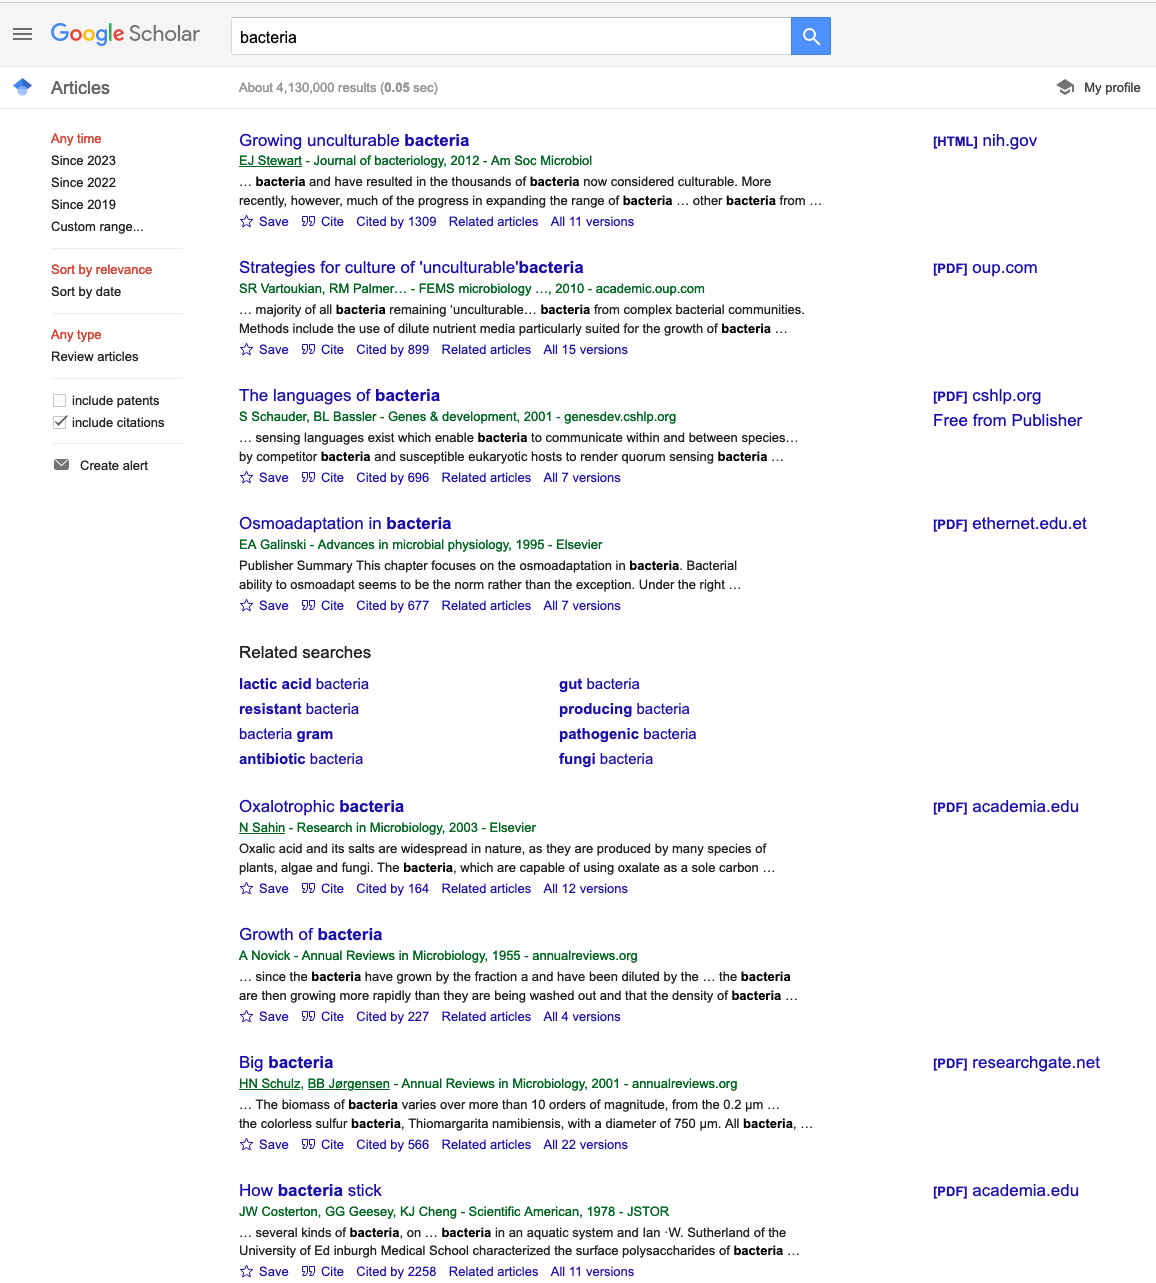 How to Scrape Google Scholar Results